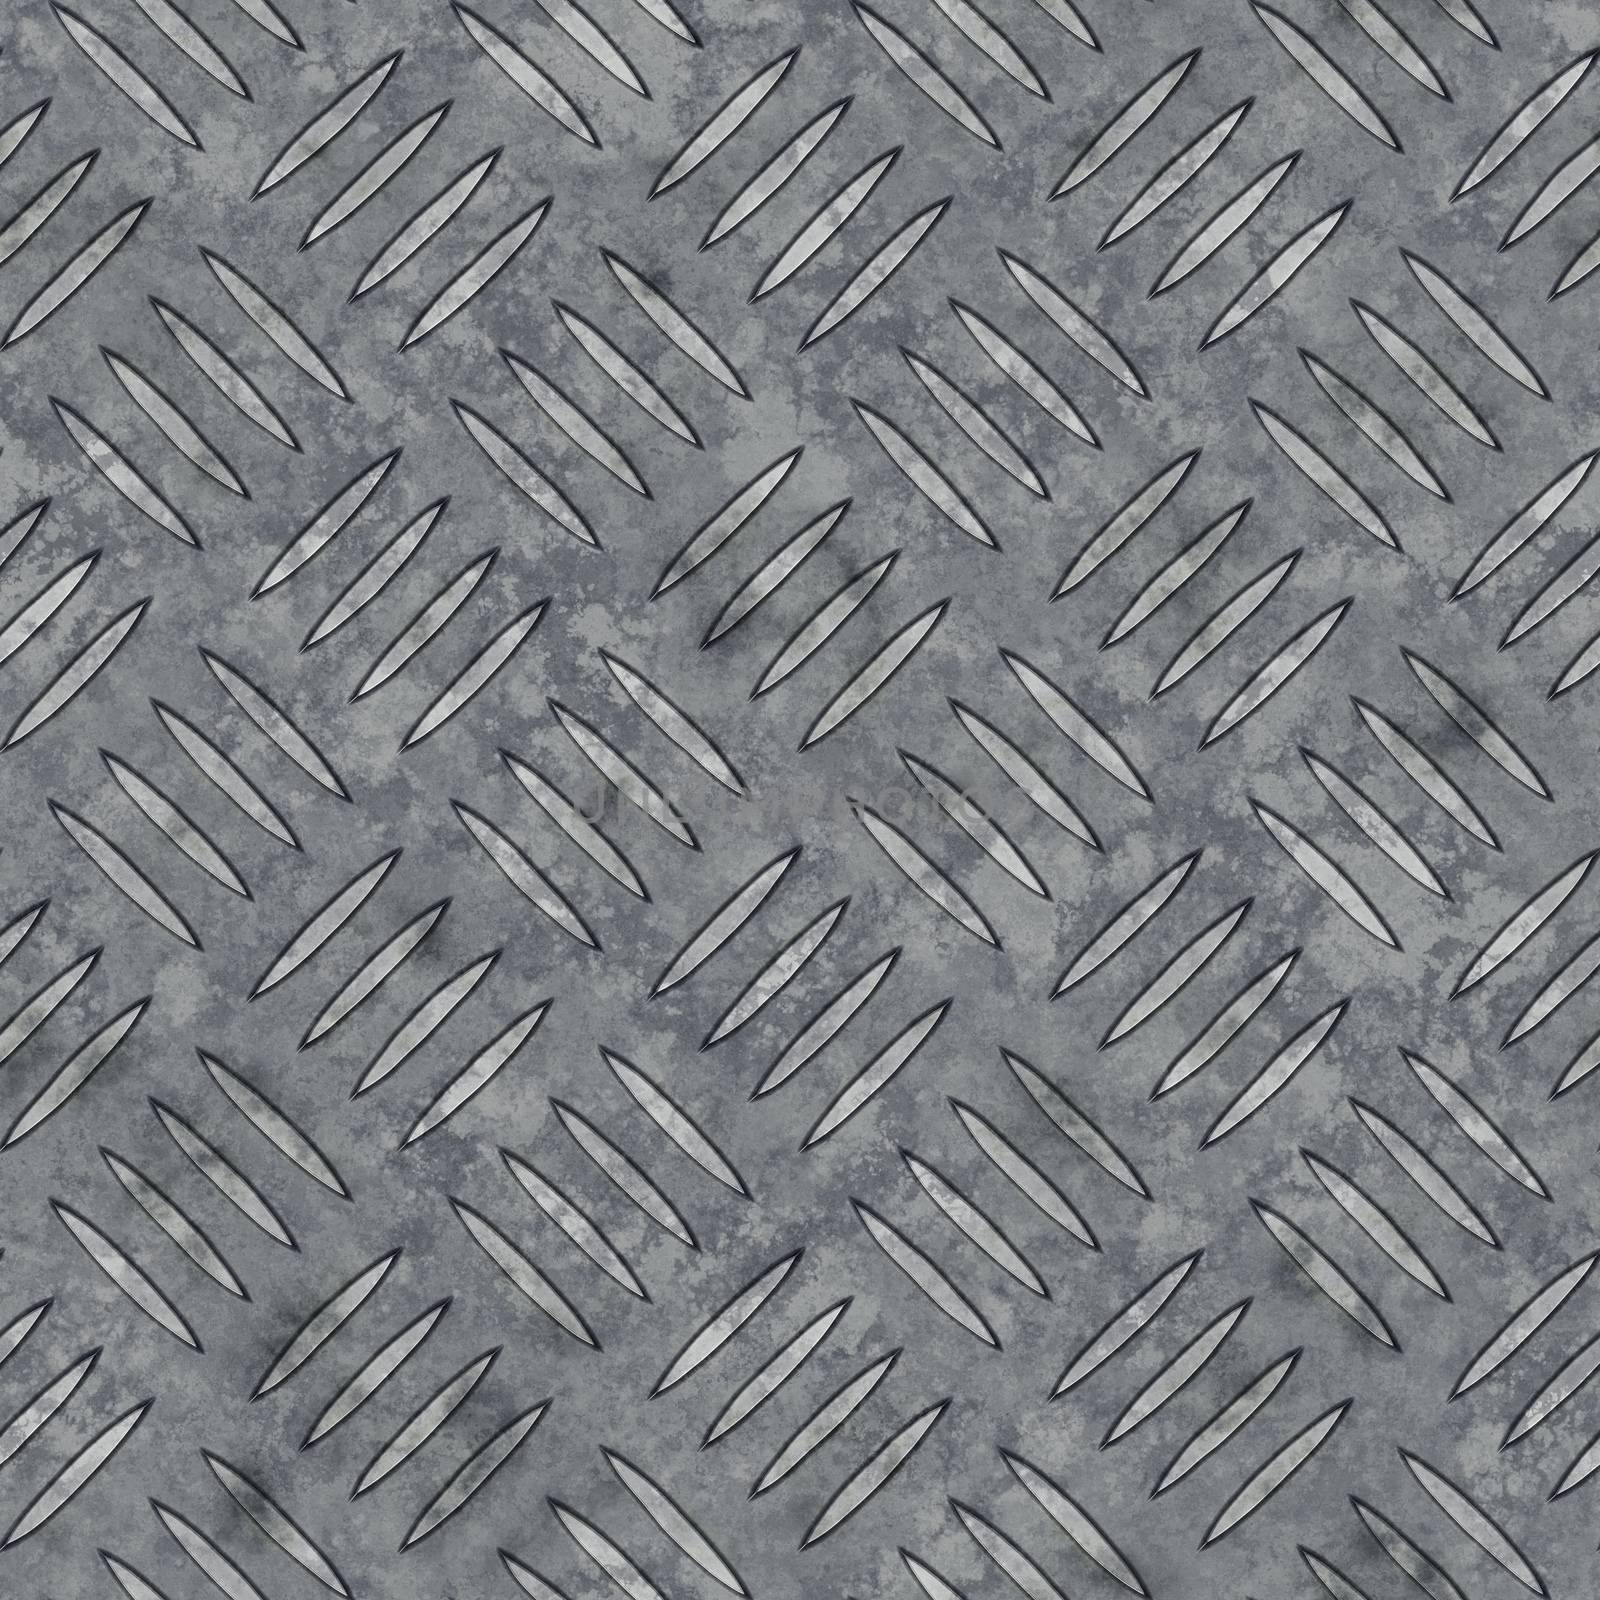 Illustration of a seamless diamond metal plate texture